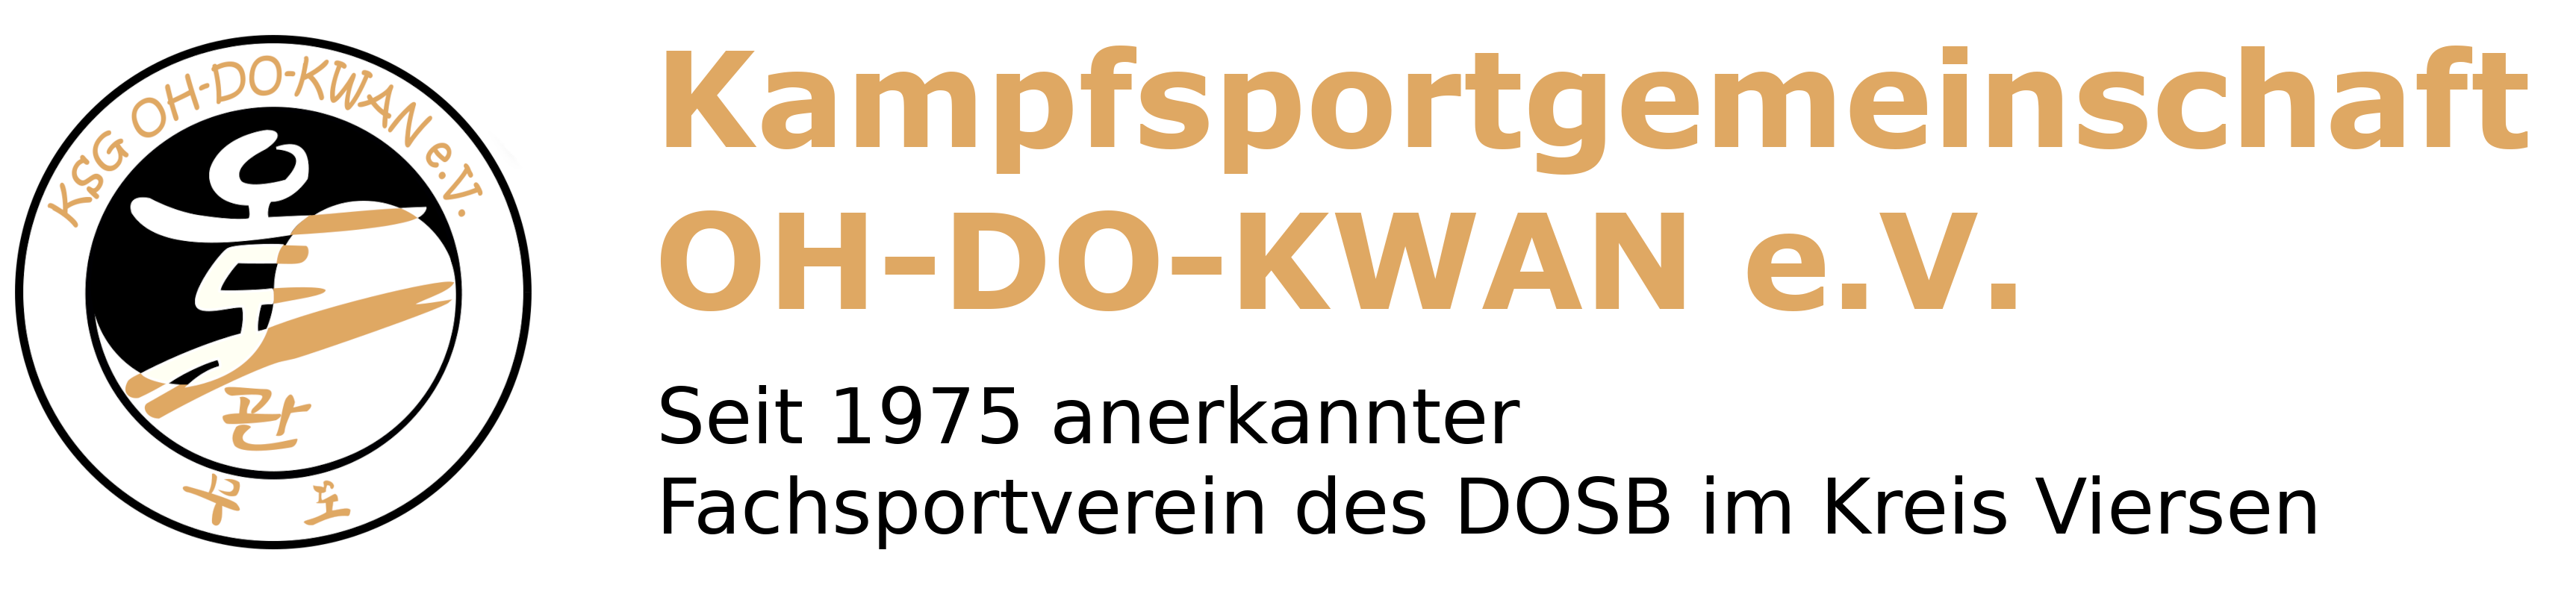 KSG OH-DO-KWAN e.V. - Kampfsport, Taekwondo, Hapkido, Kick-/Thaiboxen - Disziplin, Selbstbewusstsein, Fitness, Sicherheit, Ausgeglichenheit